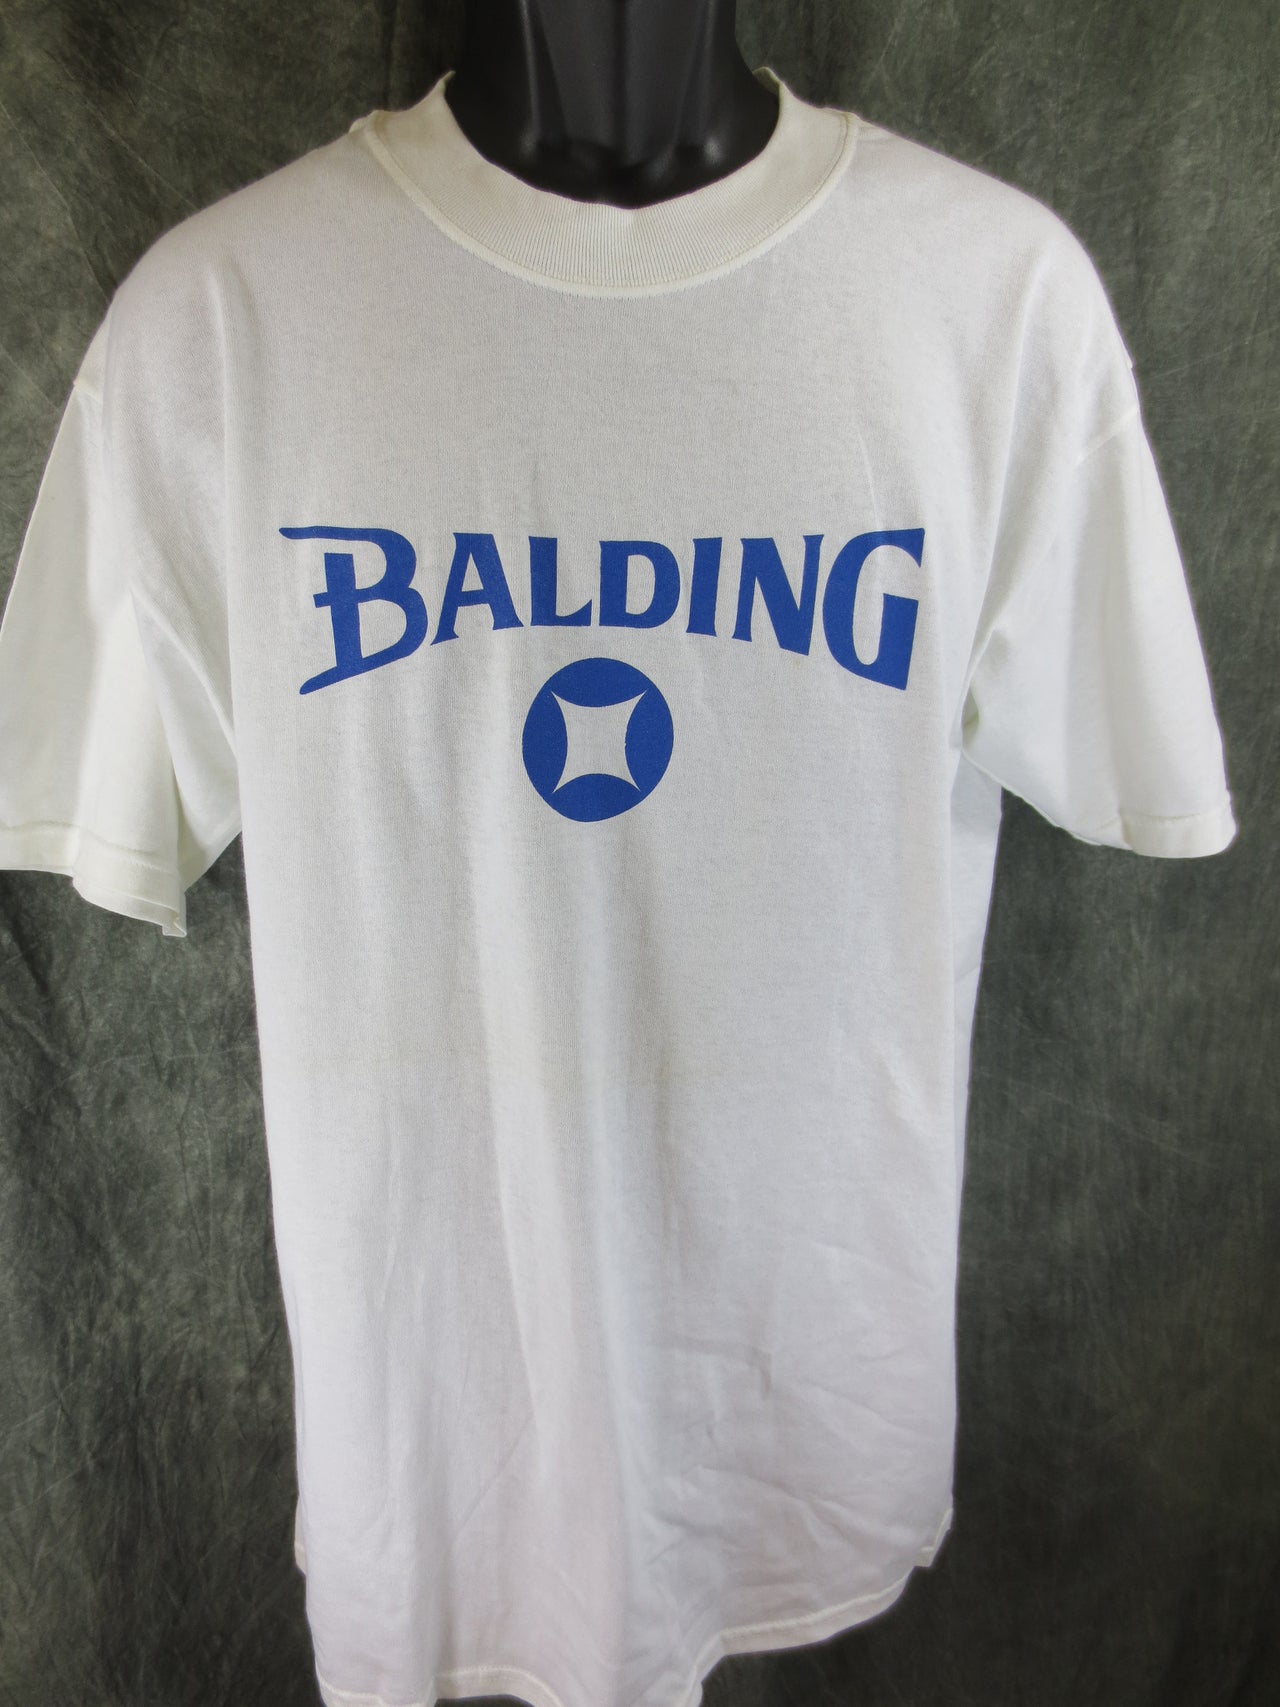 Balding Spaulding Logo Spoof - TshirtNow.net - 2